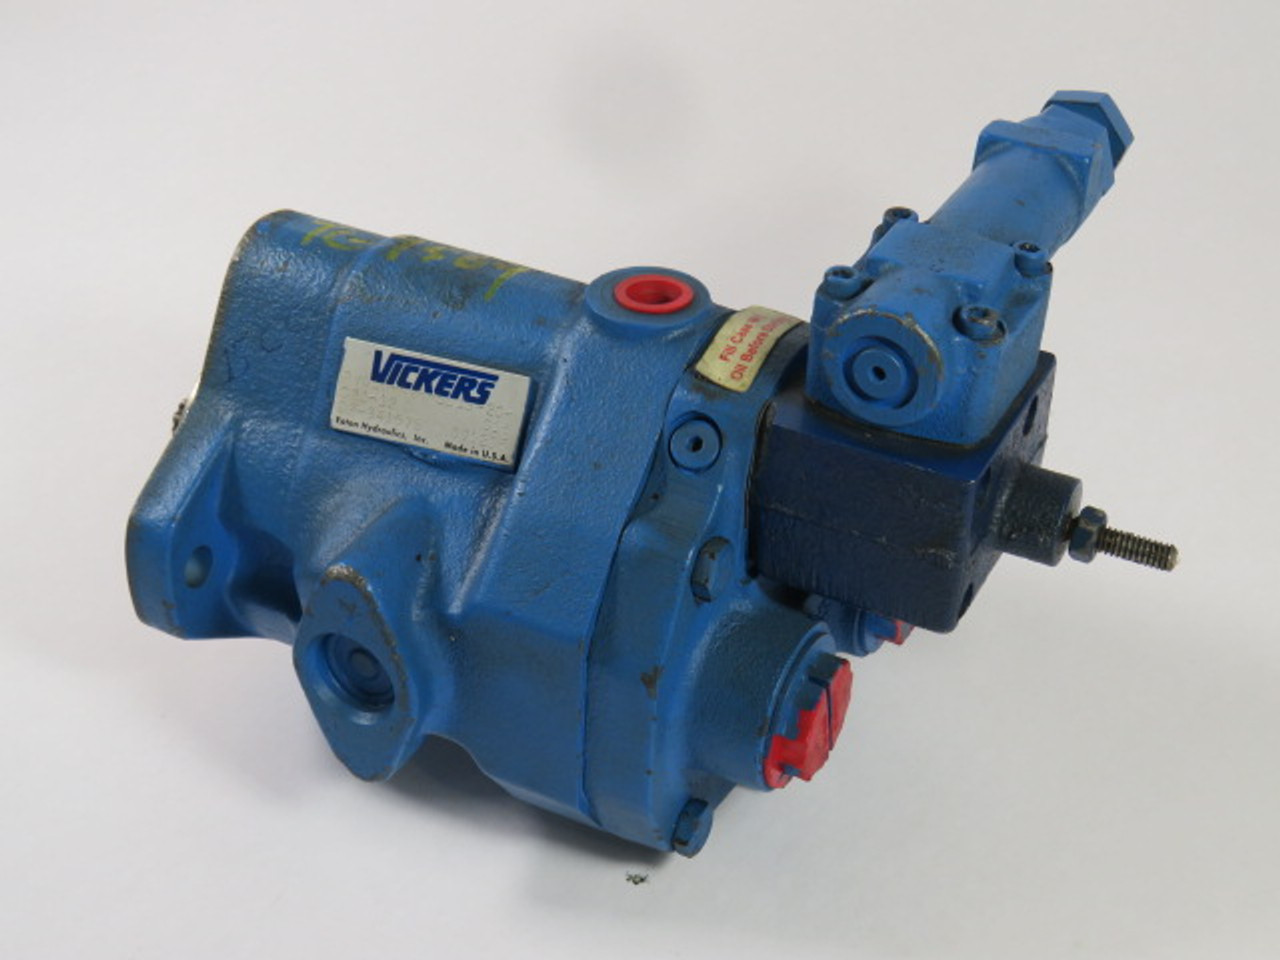 Vickers Hydraulic Piston Pump 5GPM 3000PSI 1-5/8" Port USED